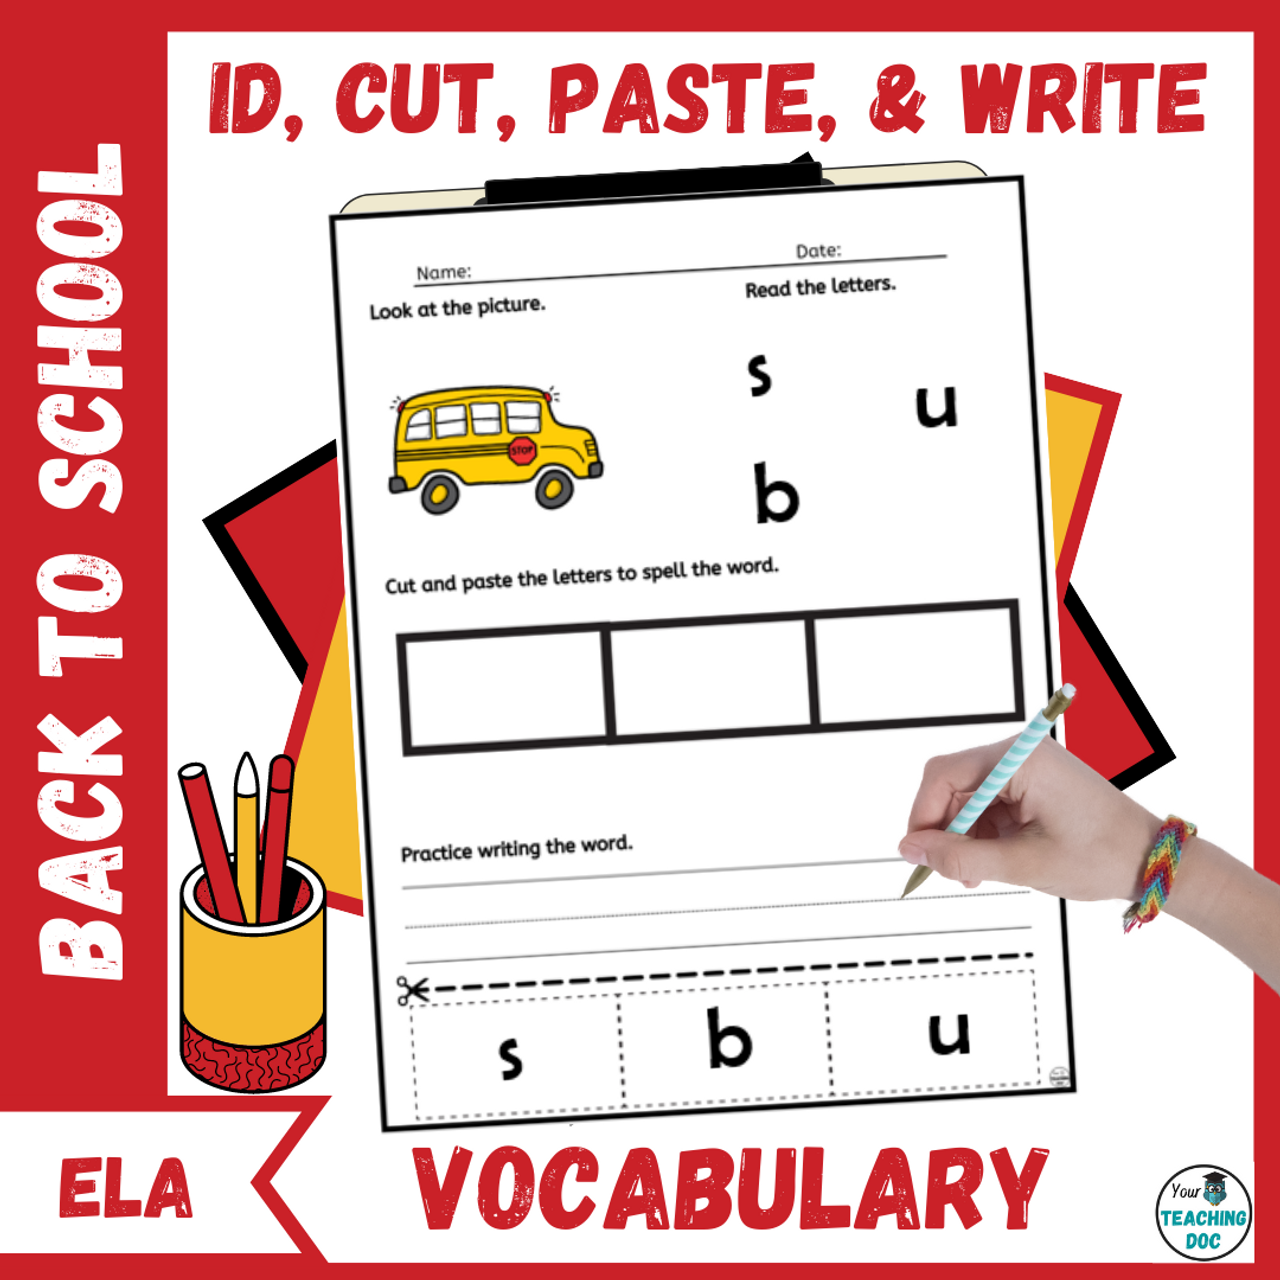 Apple Vocabulary: Preschool Literacy Activity - Friends Art Lab